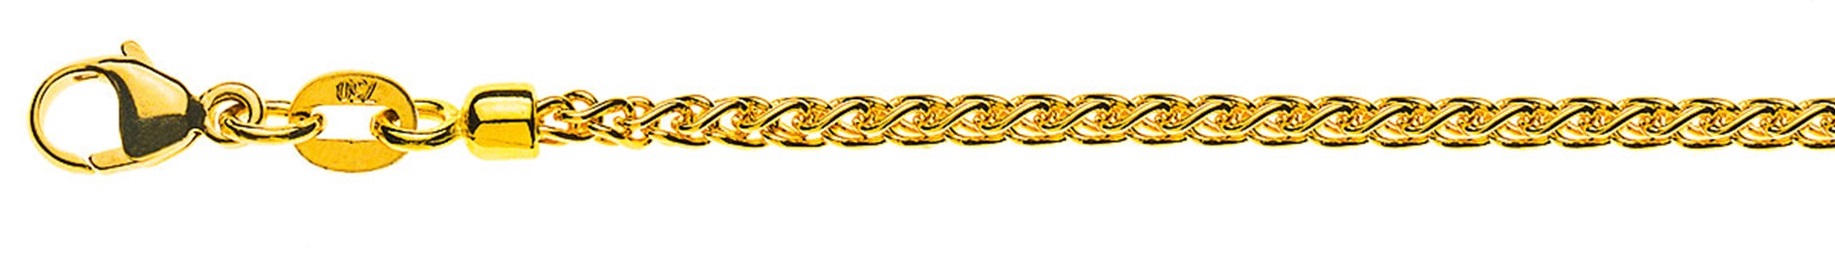 AURONOS Prestige Necklace yellow gold 18K cable chain 50cm 2.15mm